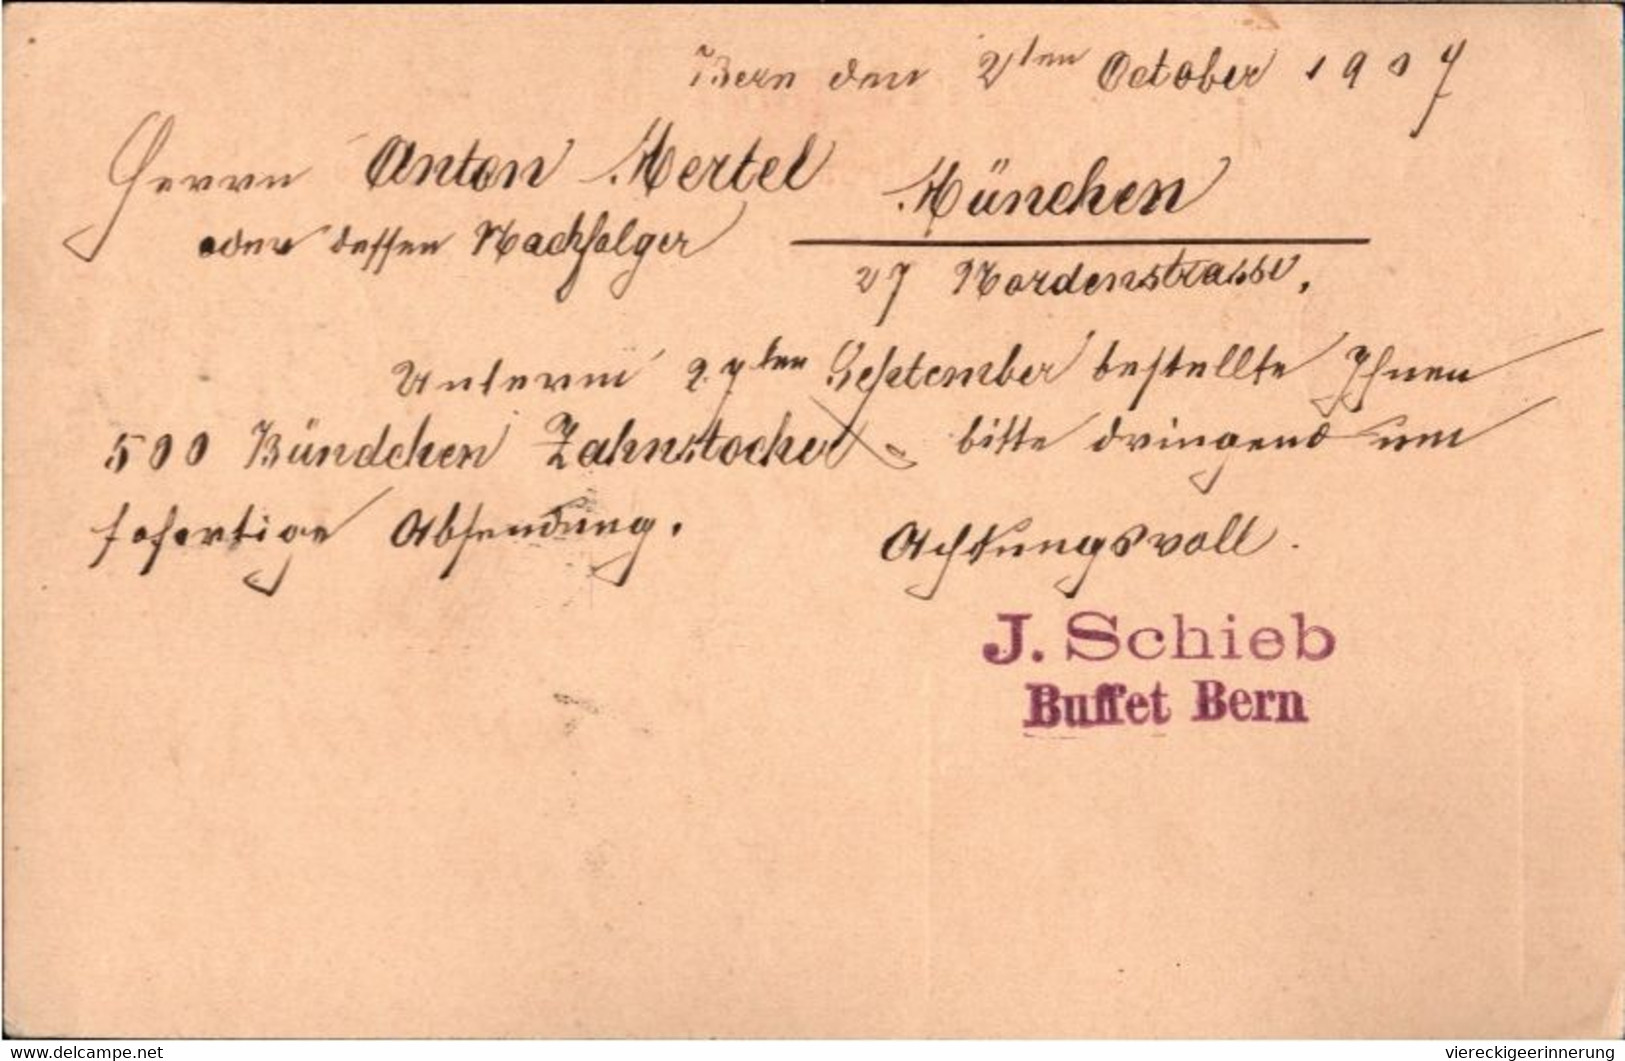 ! Lot von 15 Ganzsachen aus Bern, Schweiz, 1901-1909, u.a. Bahnhof Buffett, Velo Fabrik